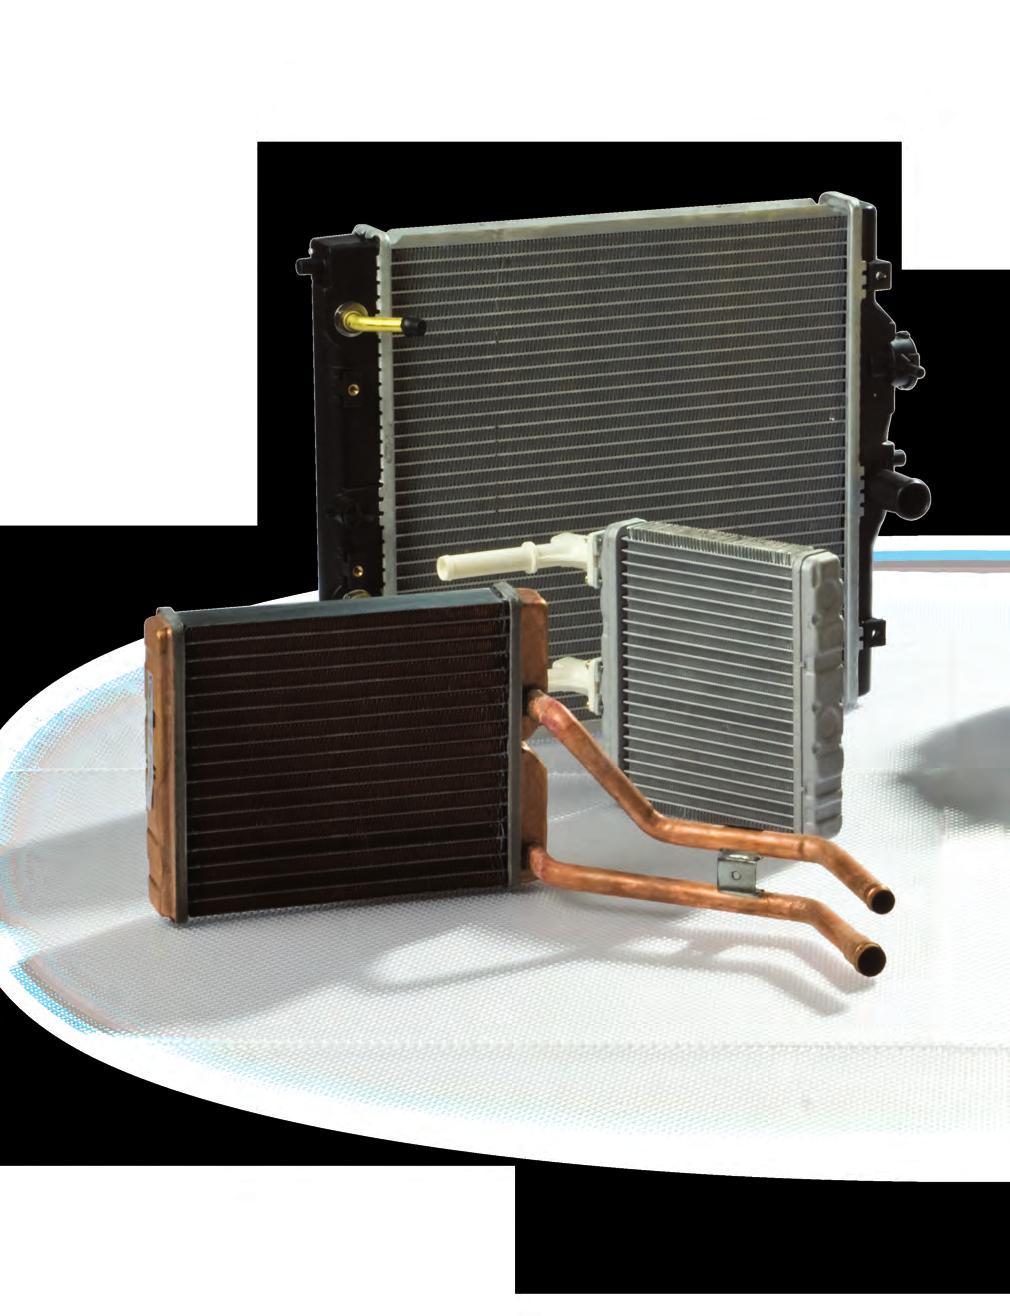 Ready-Rad TEMPERATURE CONTROL READY-RAD RADIATORS Vista-Pro s Ready-Rad Radiators are unparalleled in the industry.